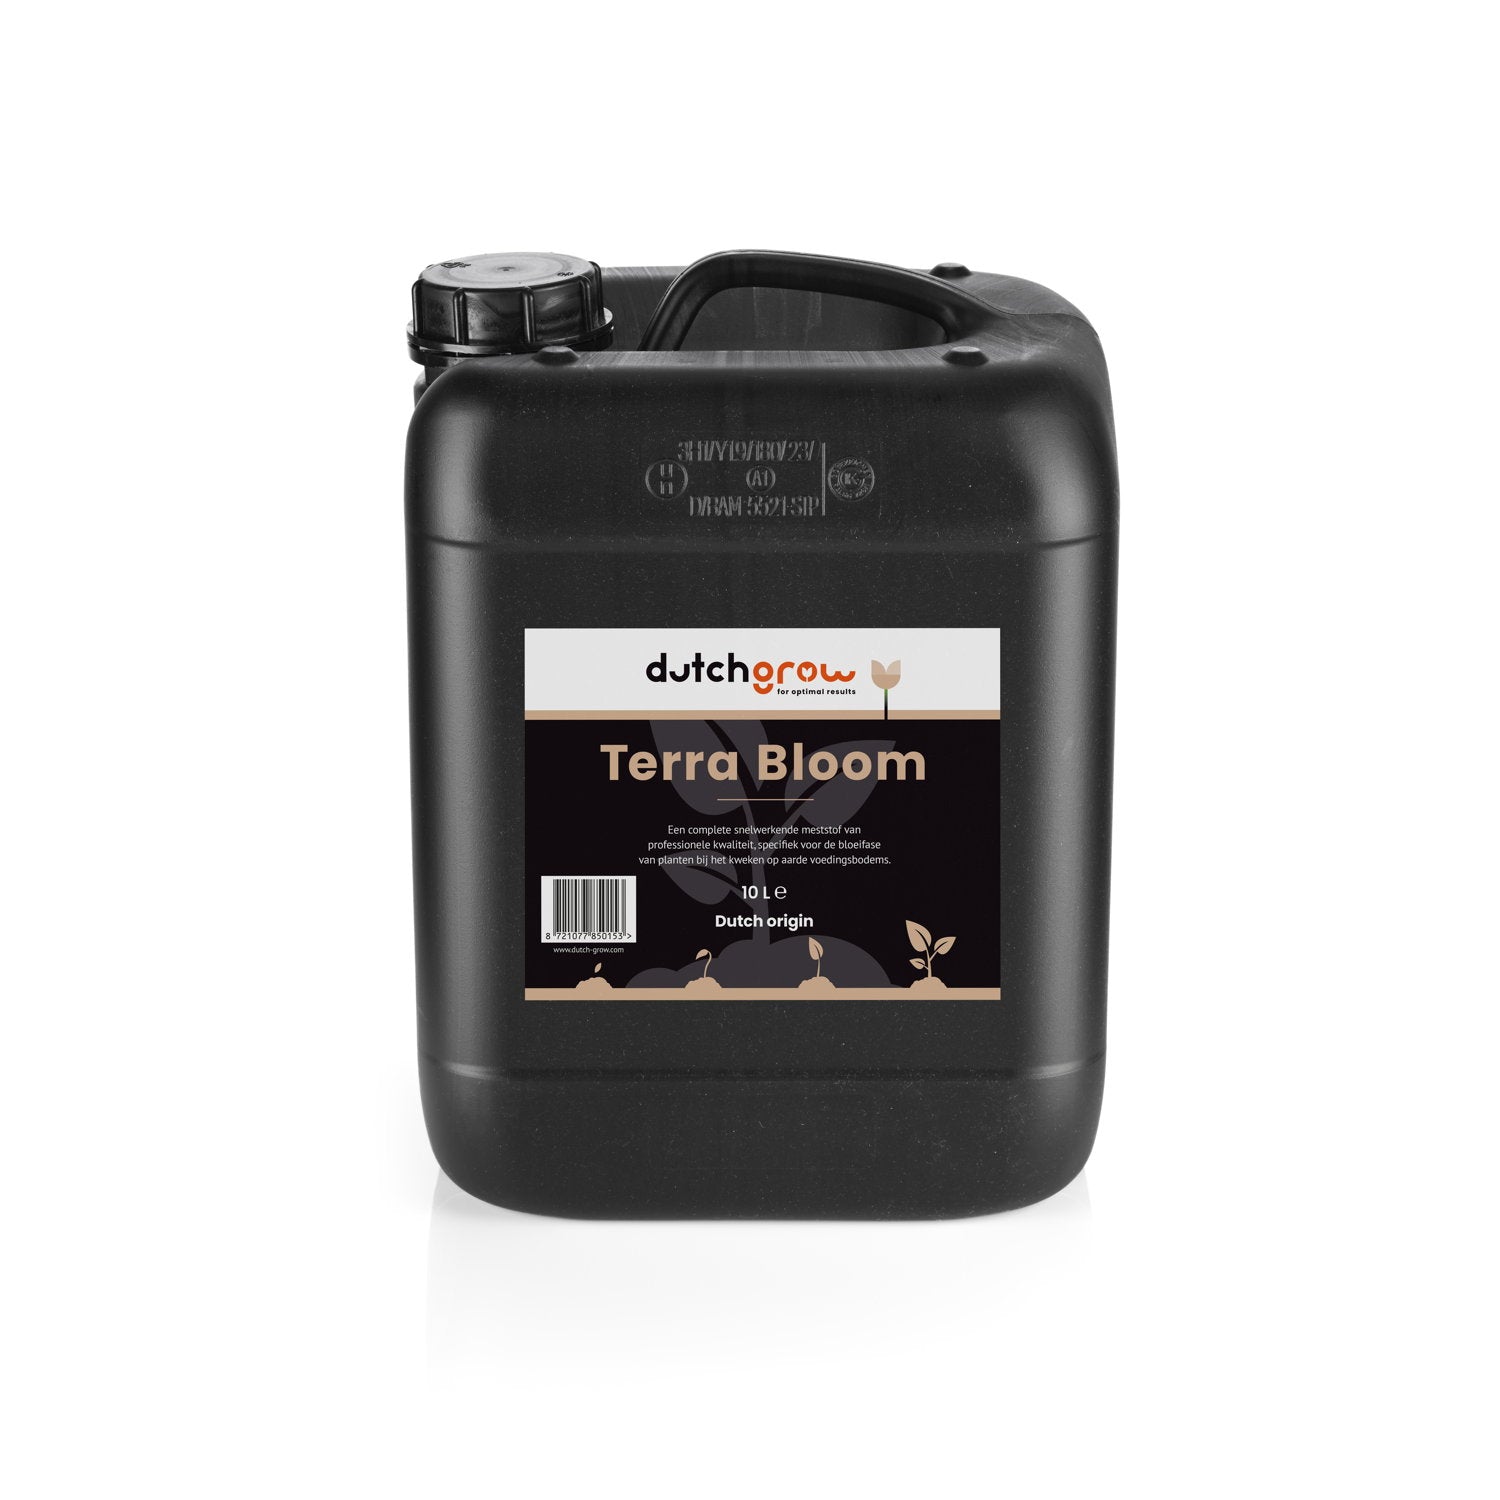 DutchGrow Terra Bloom 10 liter